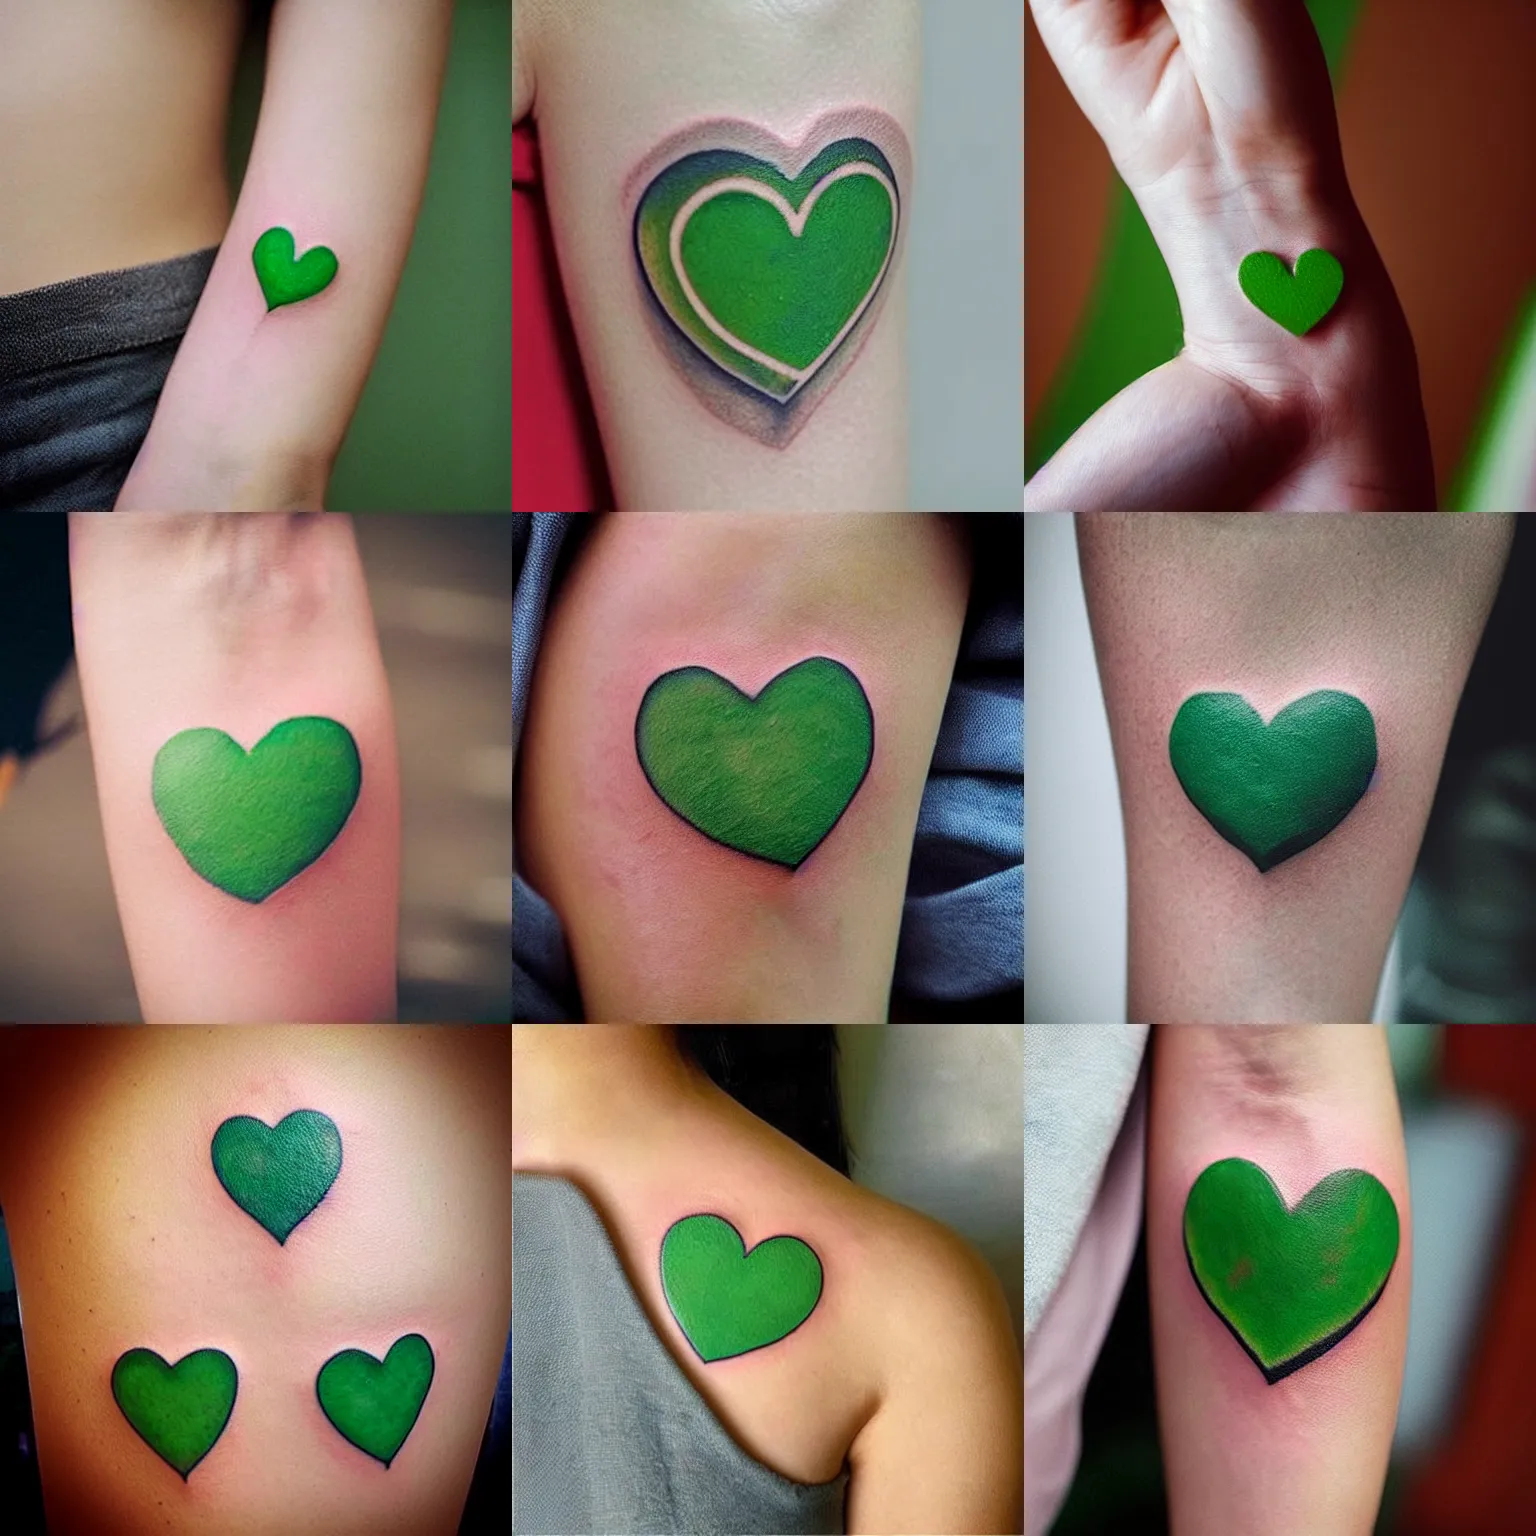 Tattoo uploaded by Robert Davies • Heart Tattoo by Keely Rutherford #Heart # HeartTattoos #Kawaii #CuteTattoos #KeelyRutherford • Tattoodo